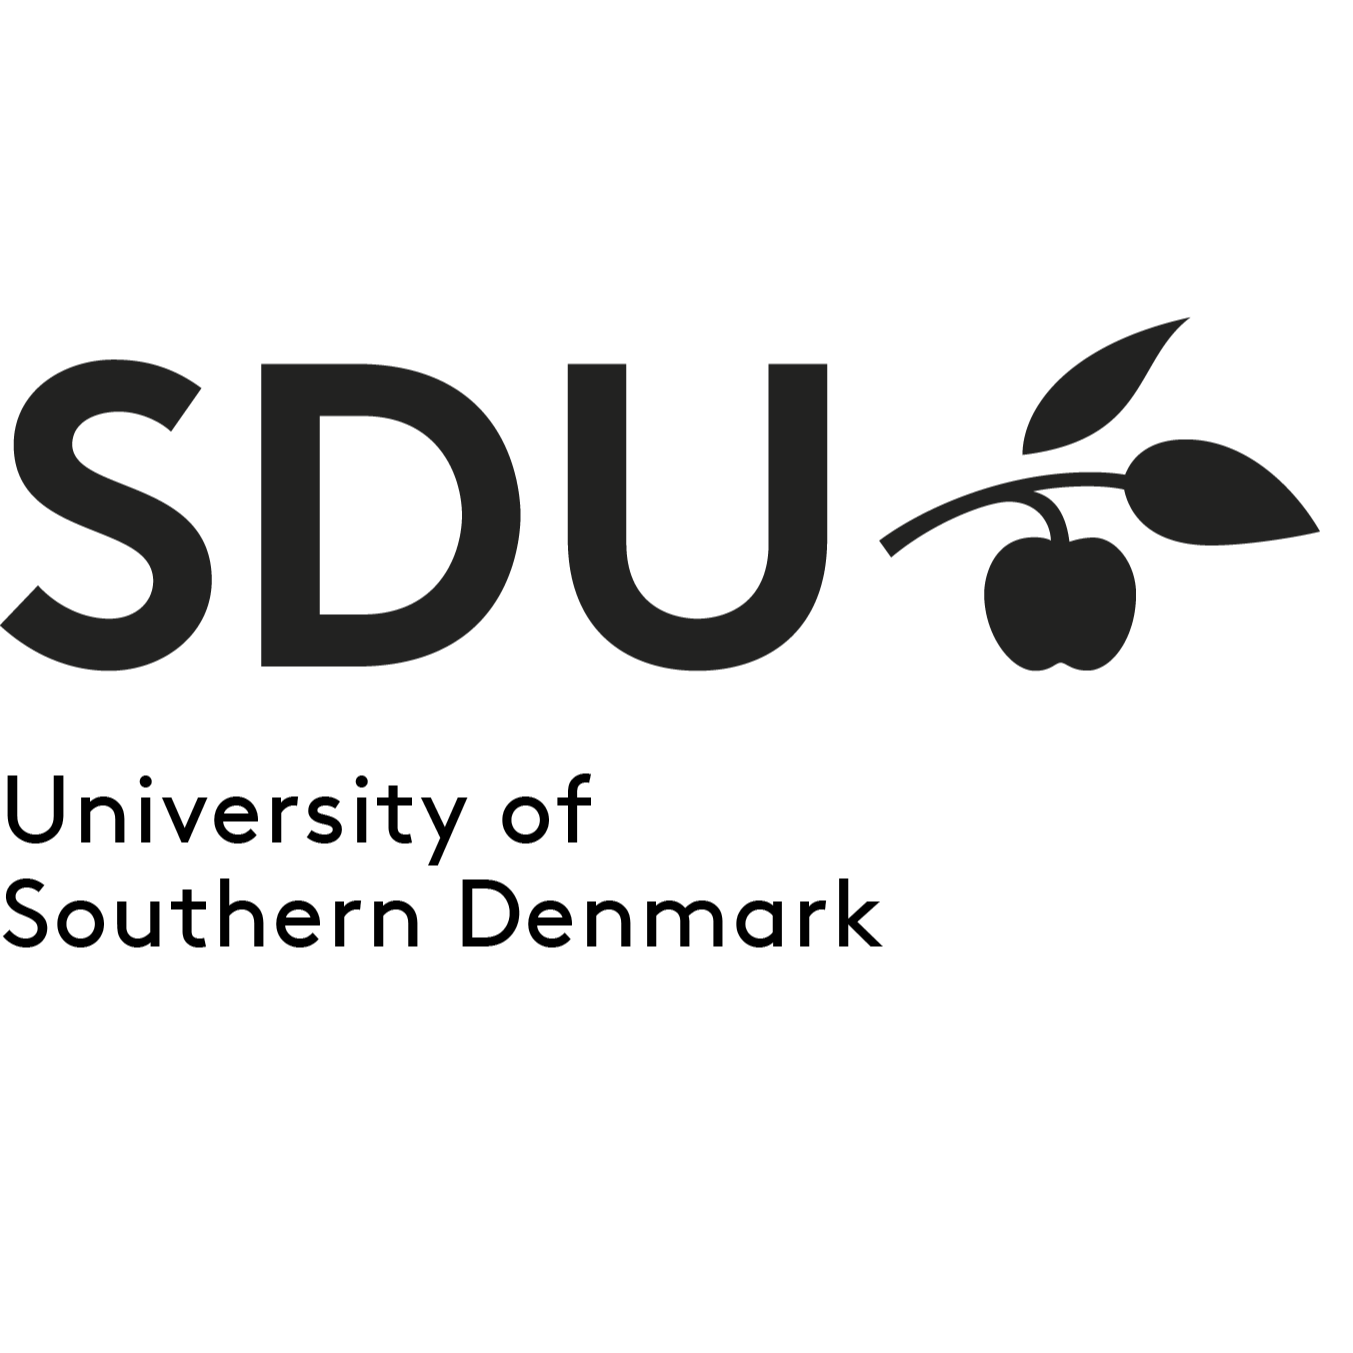 SDU Logo